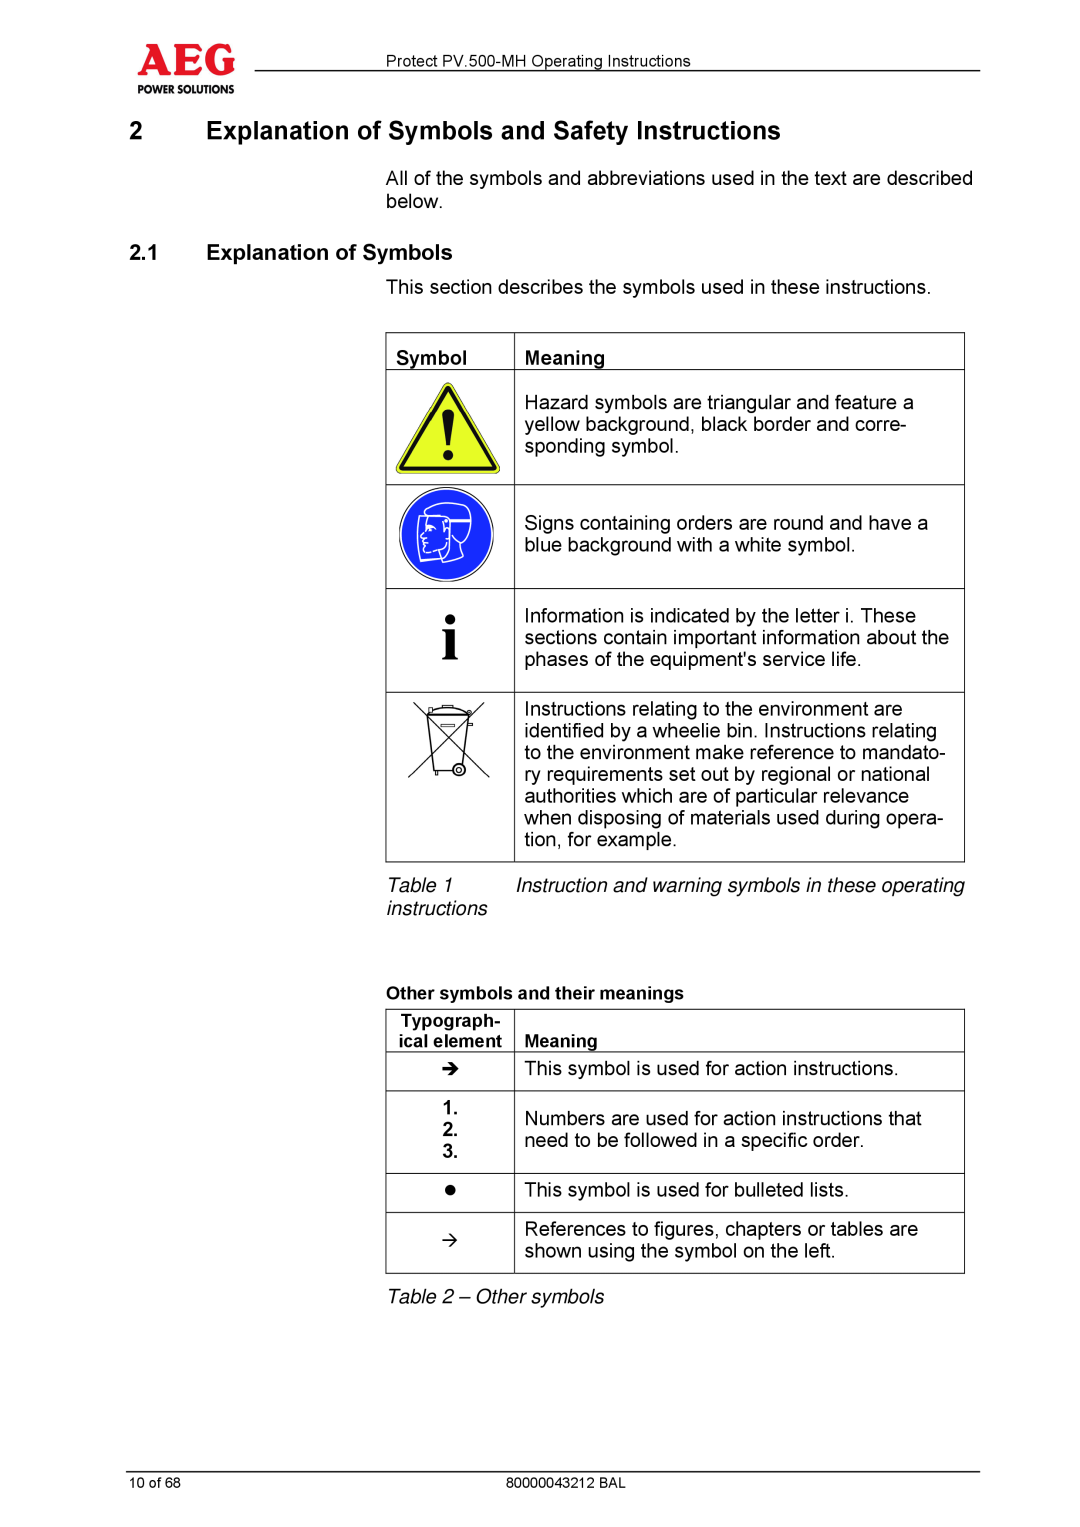 AEG PV.500-MH manual Explanation of Symbols and Safety Instructions, 2.1Explanation of Symbols, Meaning, instructions 